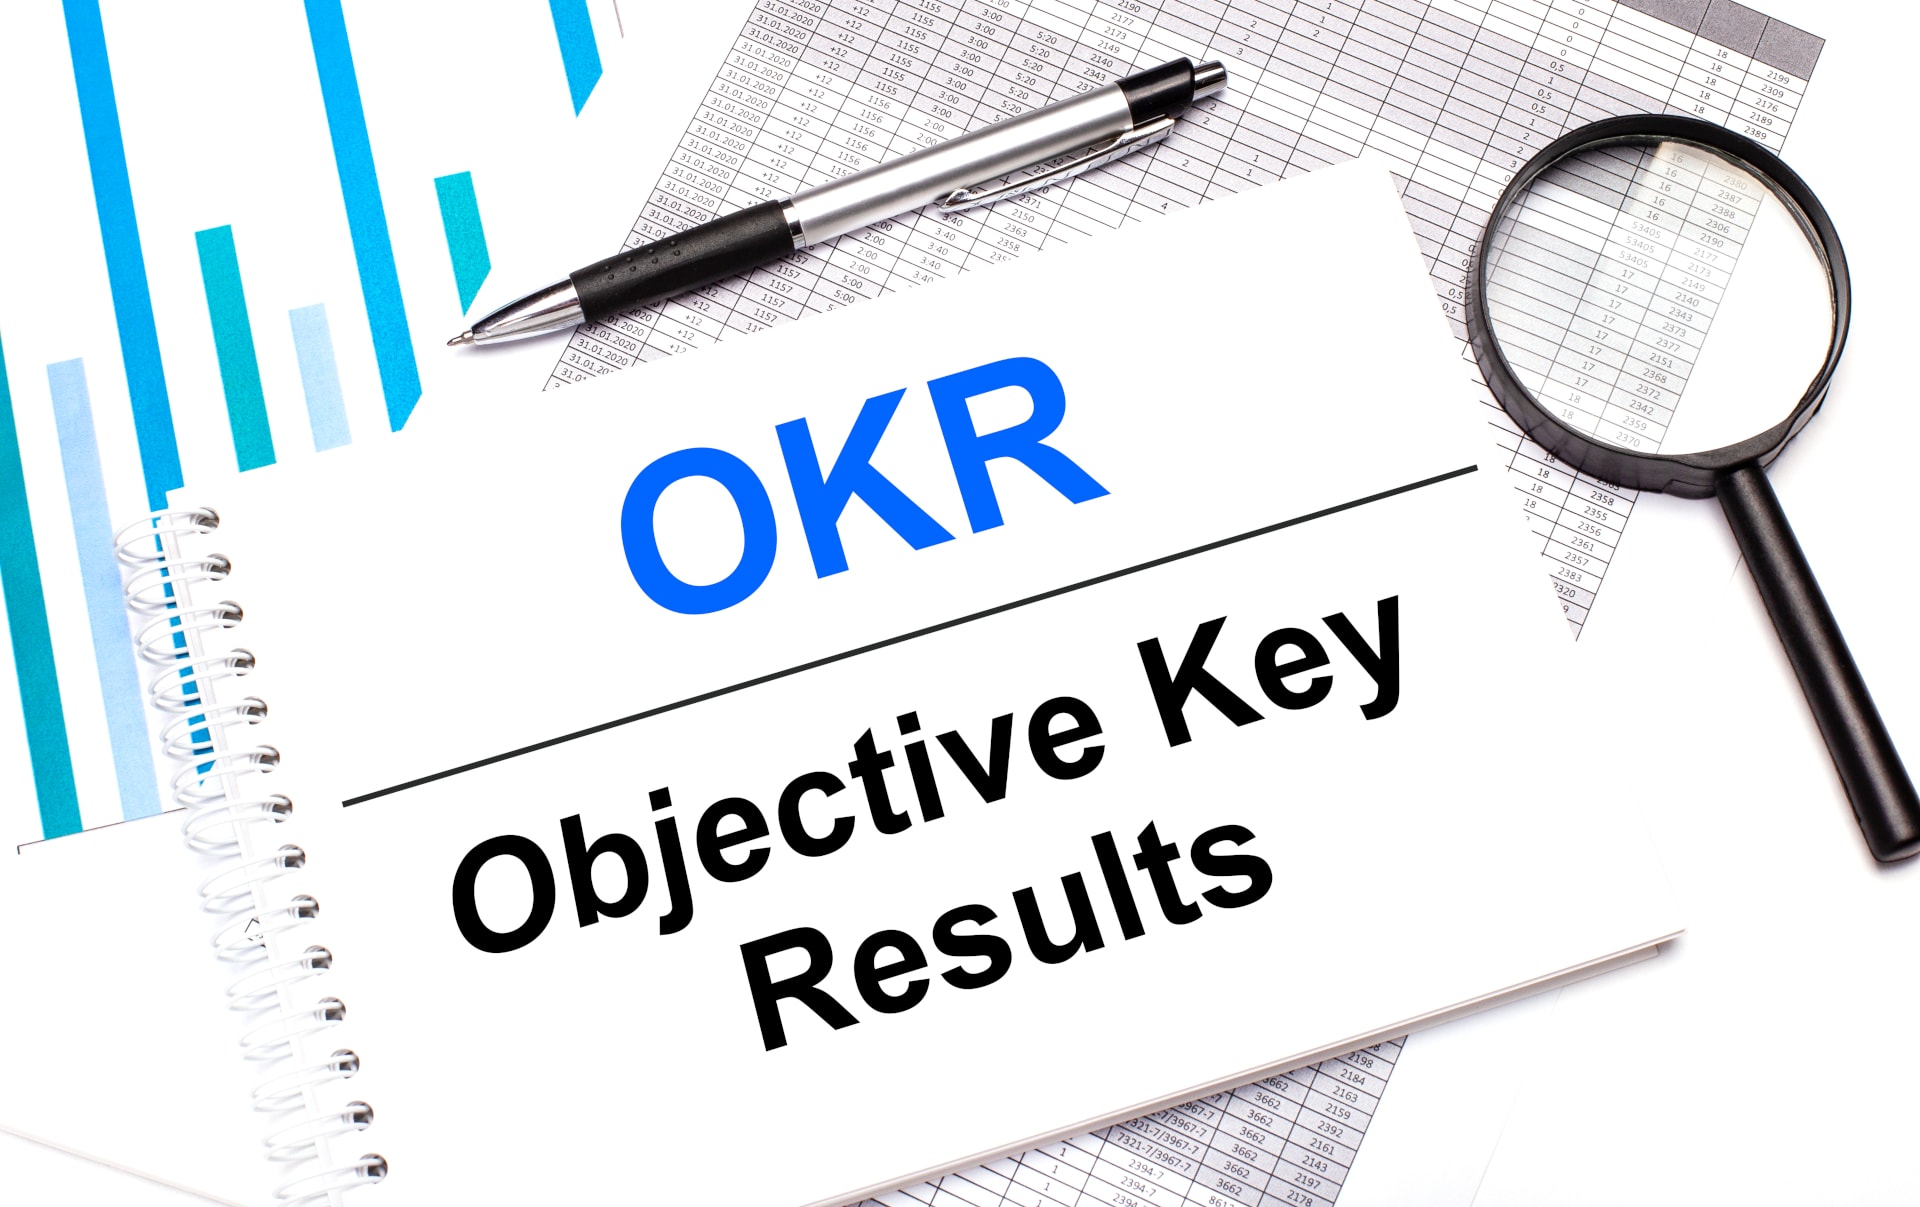 Objective Key Results